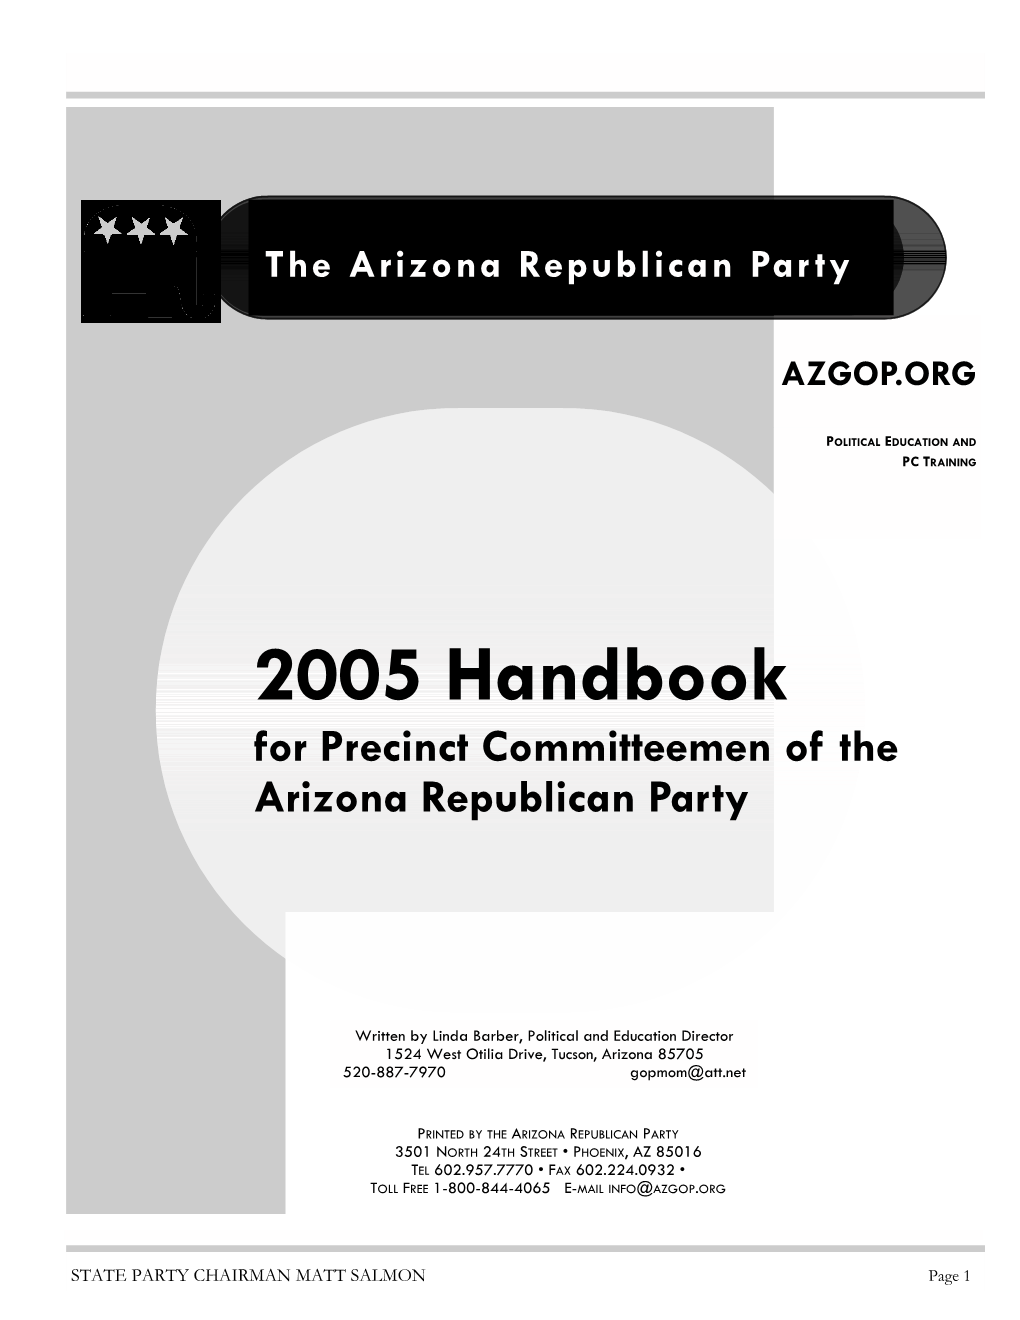 The Arizona Republican Party